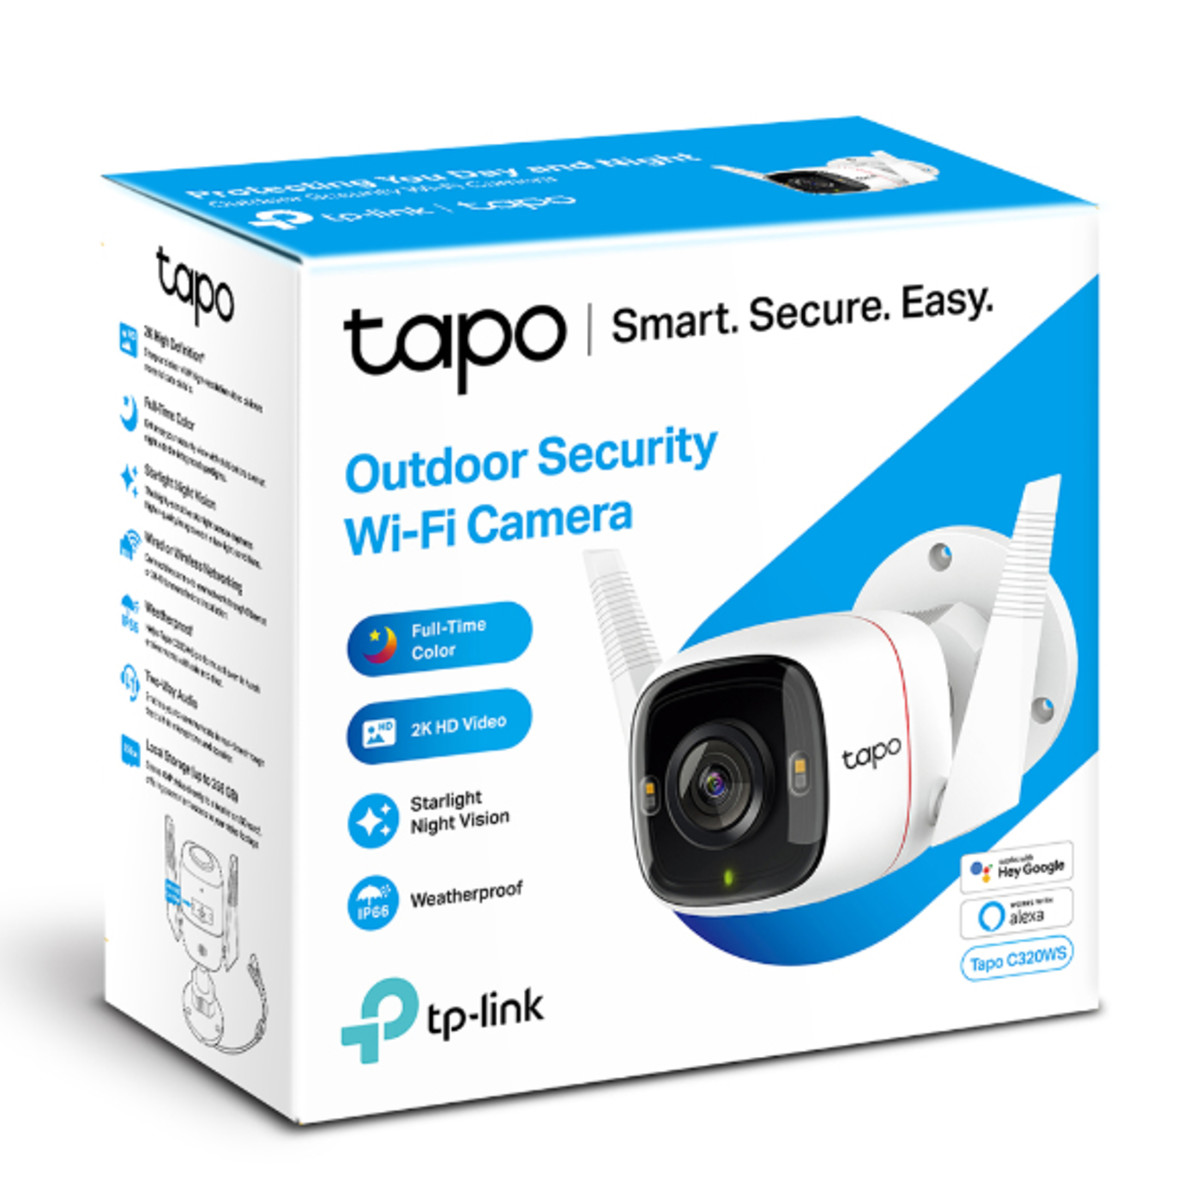 Outdoor Security Wi-Fi Camera